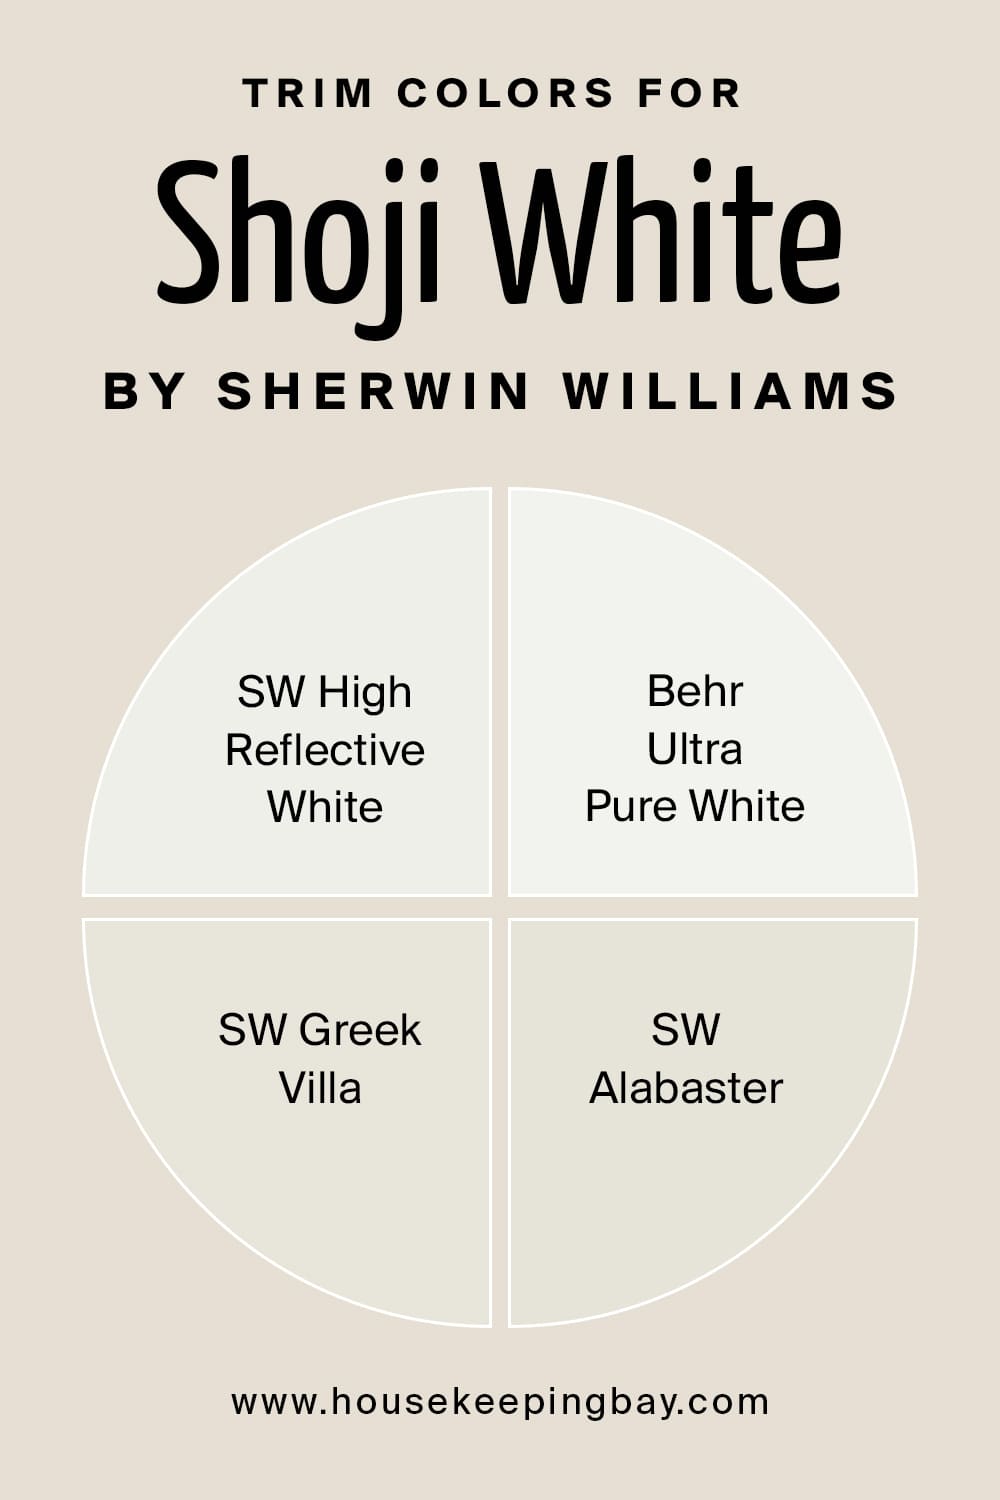 Trim Colors for Shoji White by Sherwin Williams